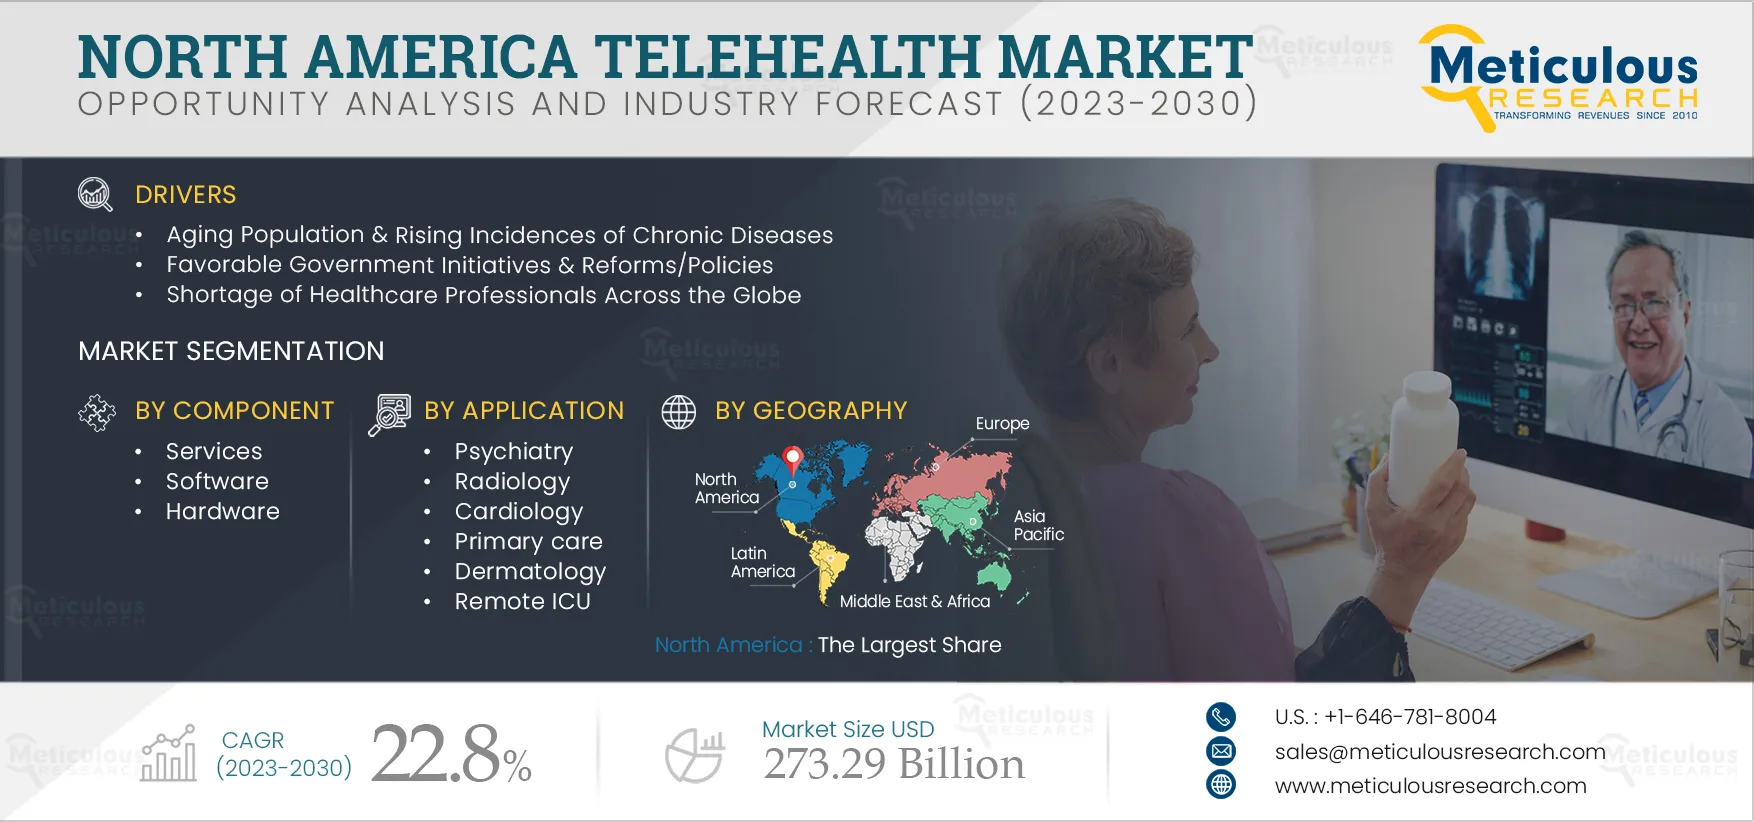 North America Telehealth Market